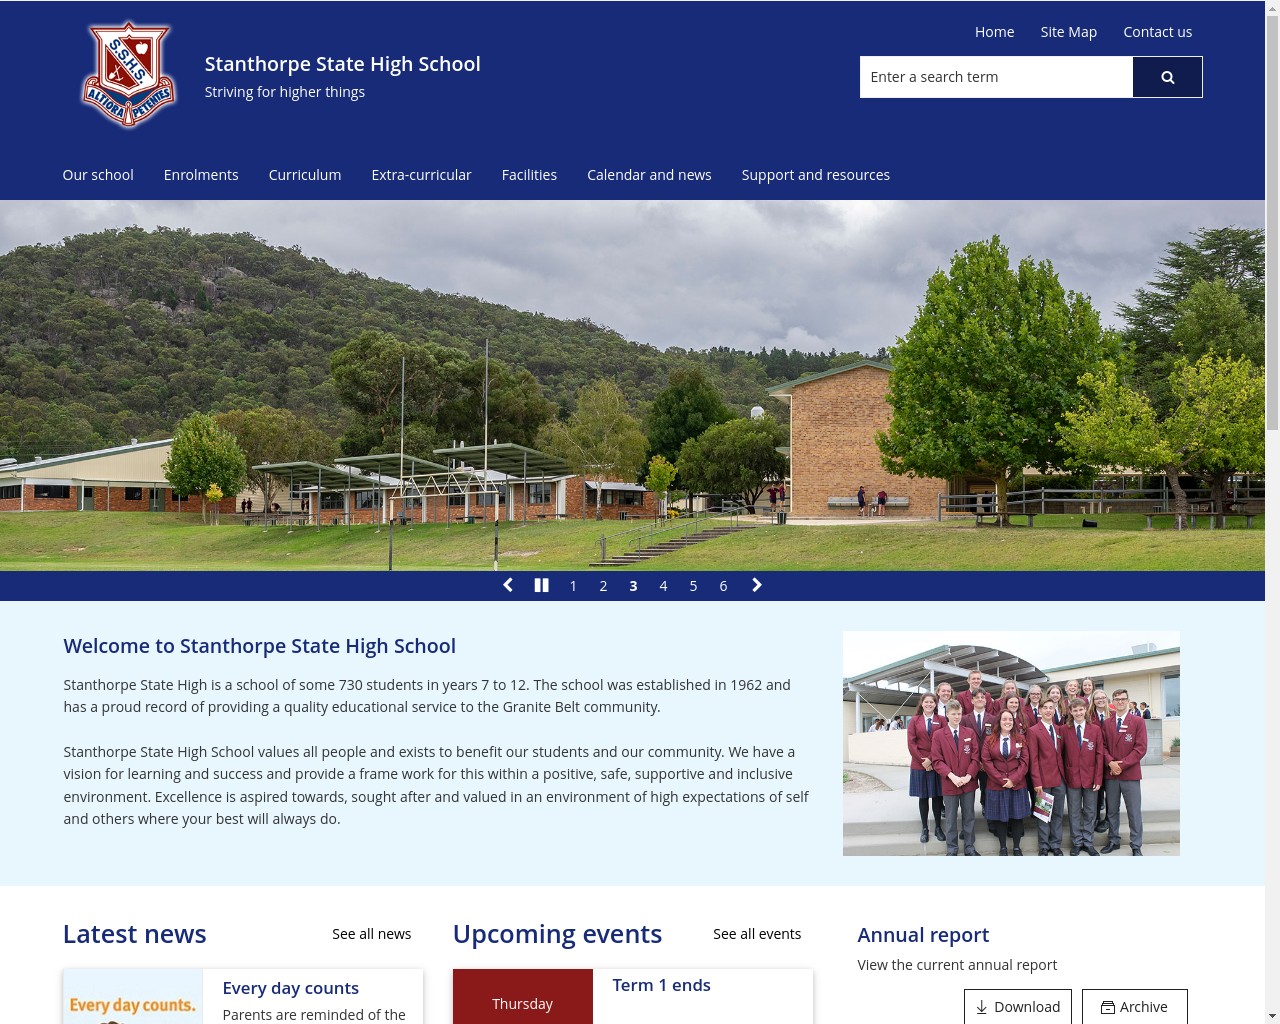 Stanthorpe State High School